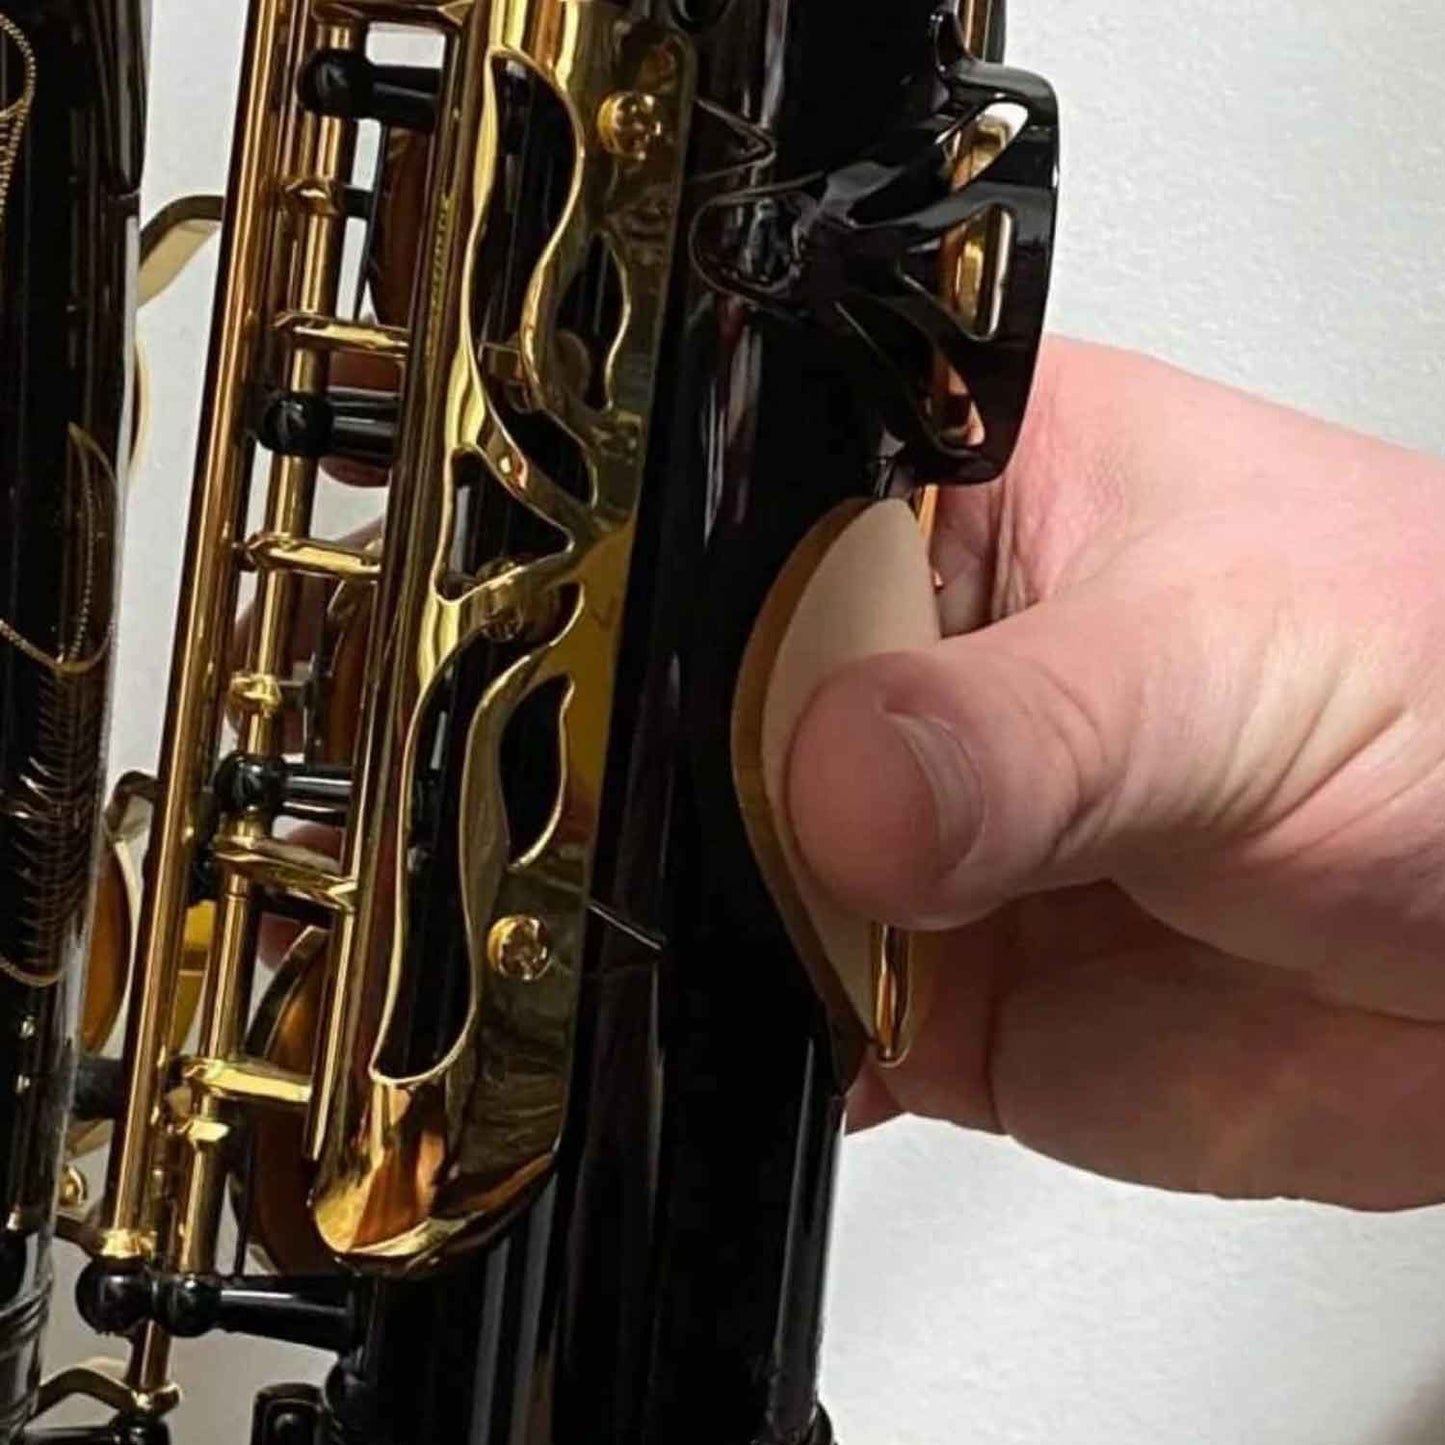 RULON Ergonomic Saxophone Thumb Rest - Rhodium Plate